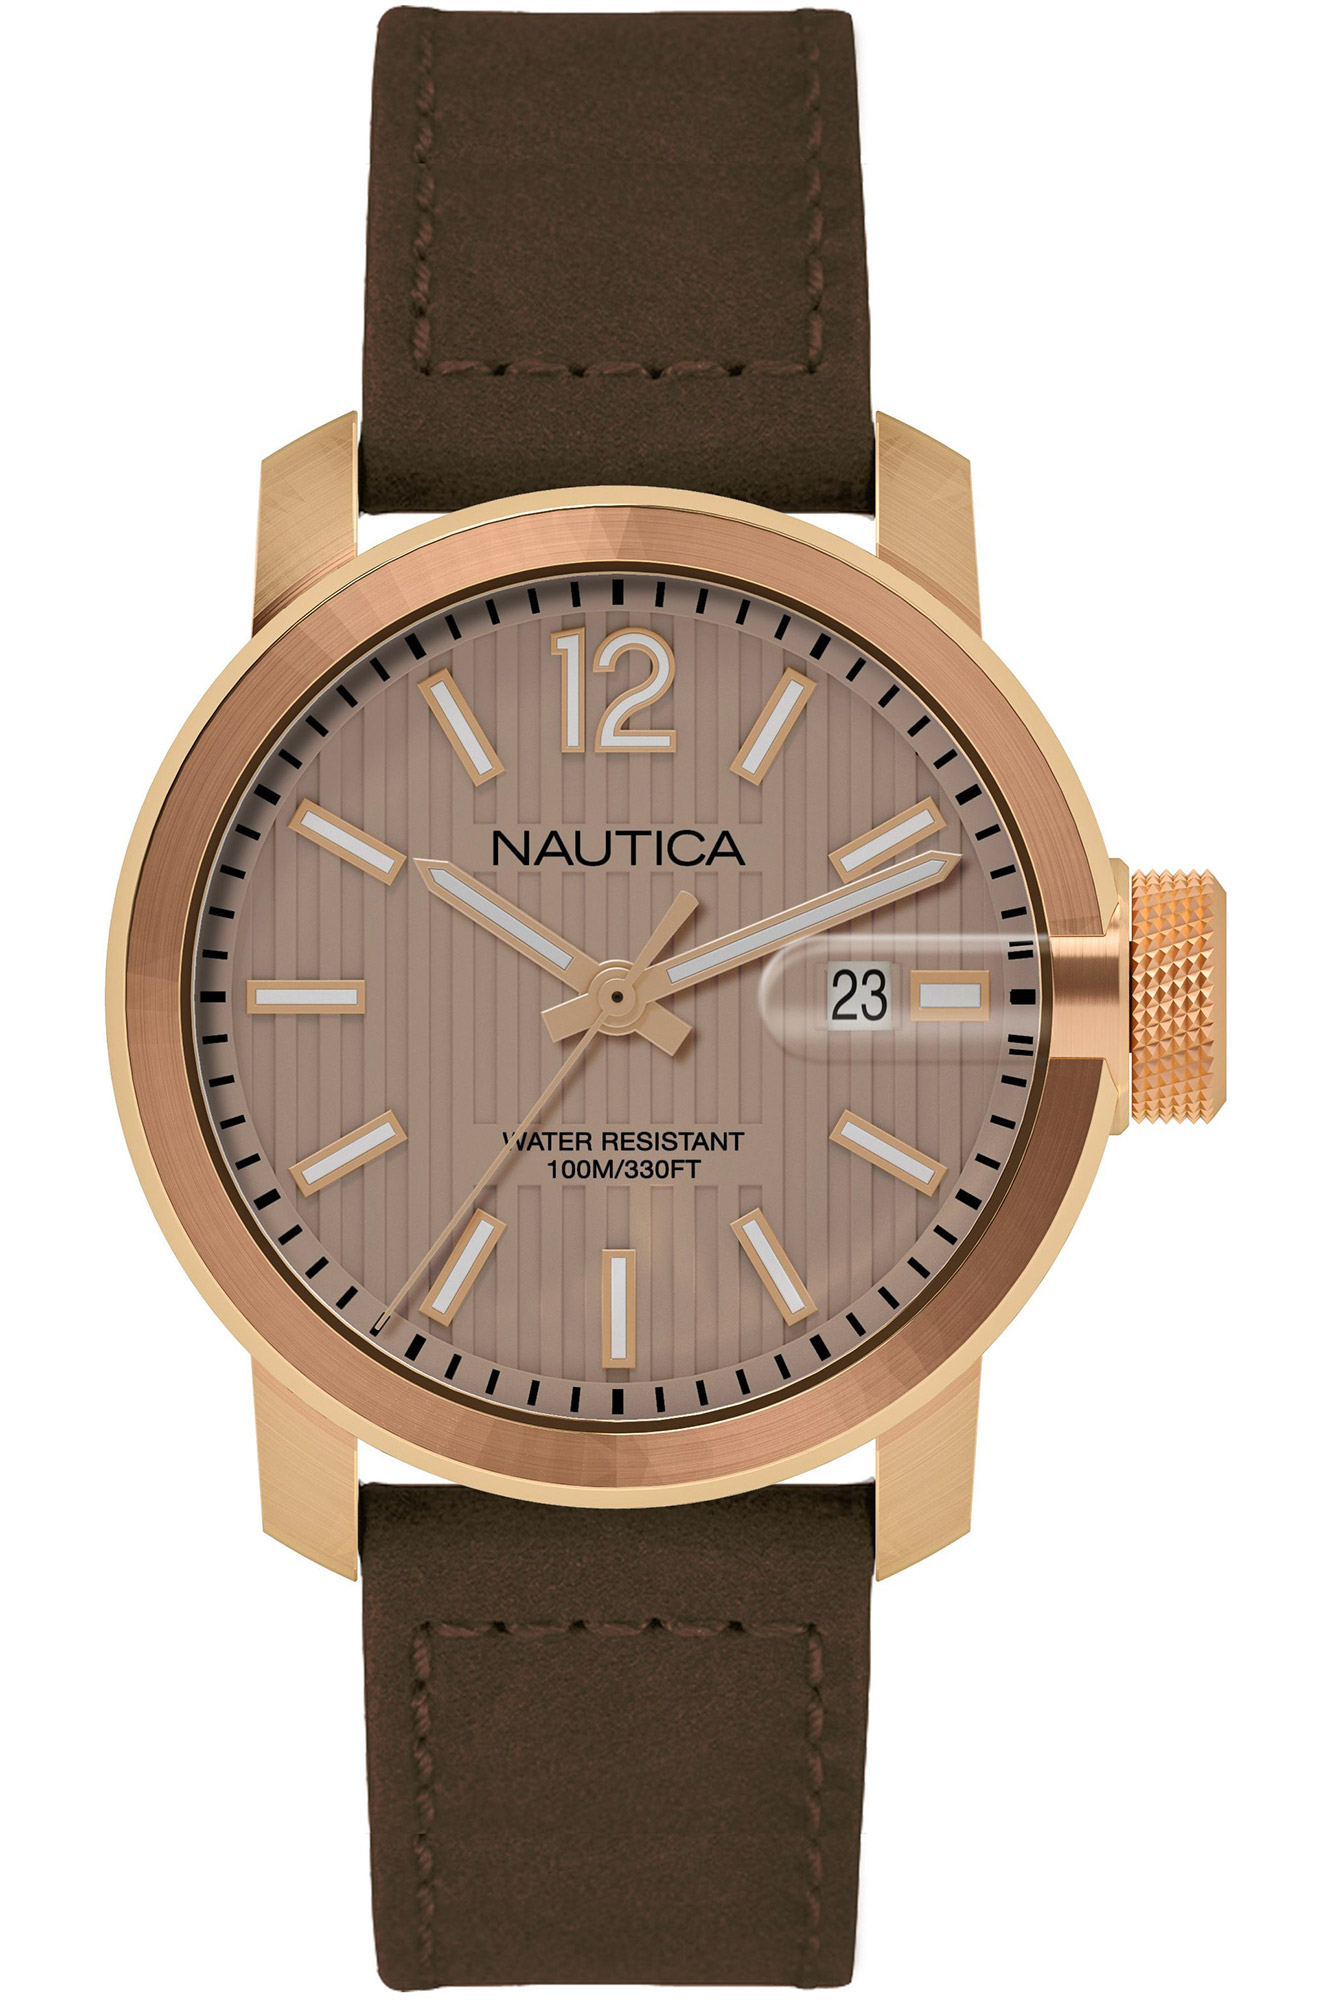 Reloj Nautica napsyd005